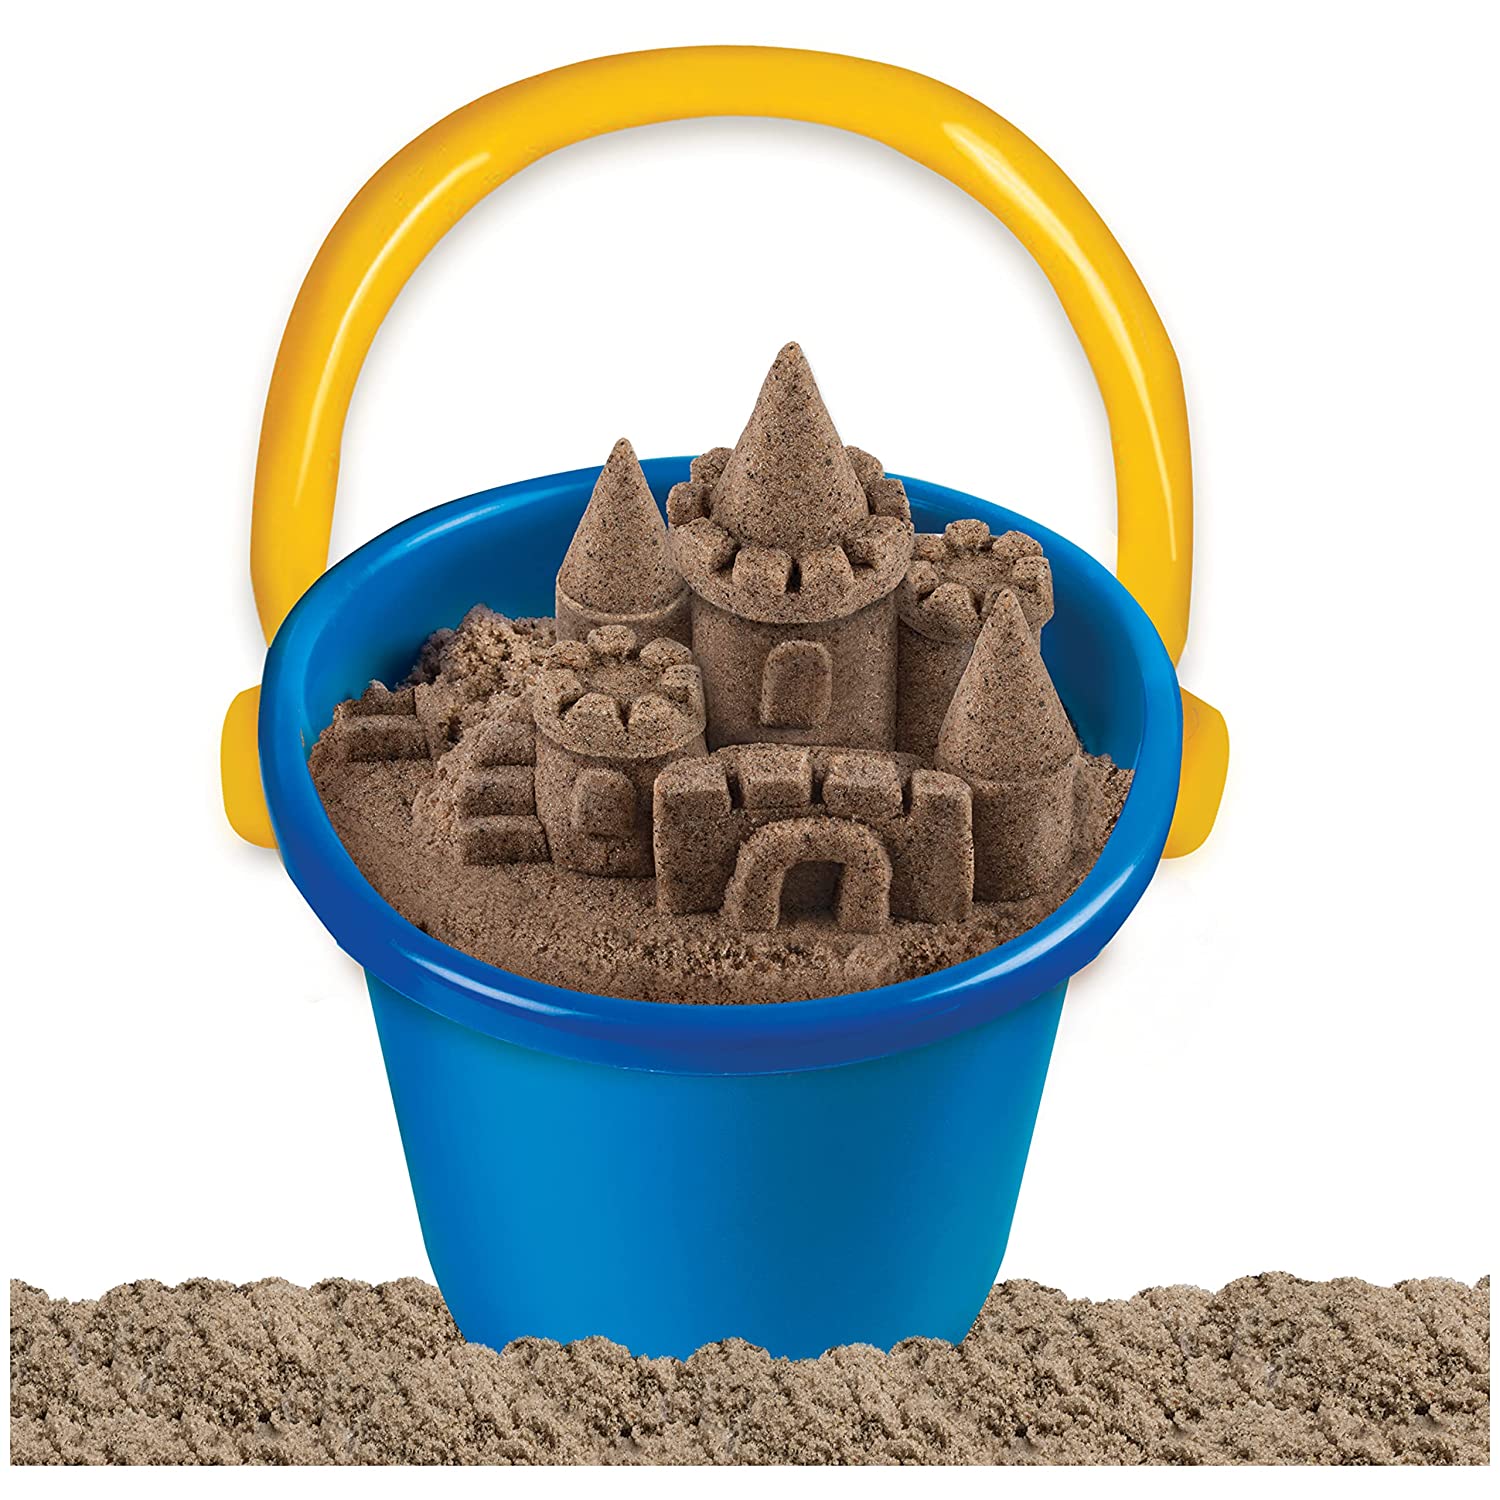 Kinetic Sand Beach Sand - 3 Pound Bag-Spin Master Ltd-Little Giant Kidz